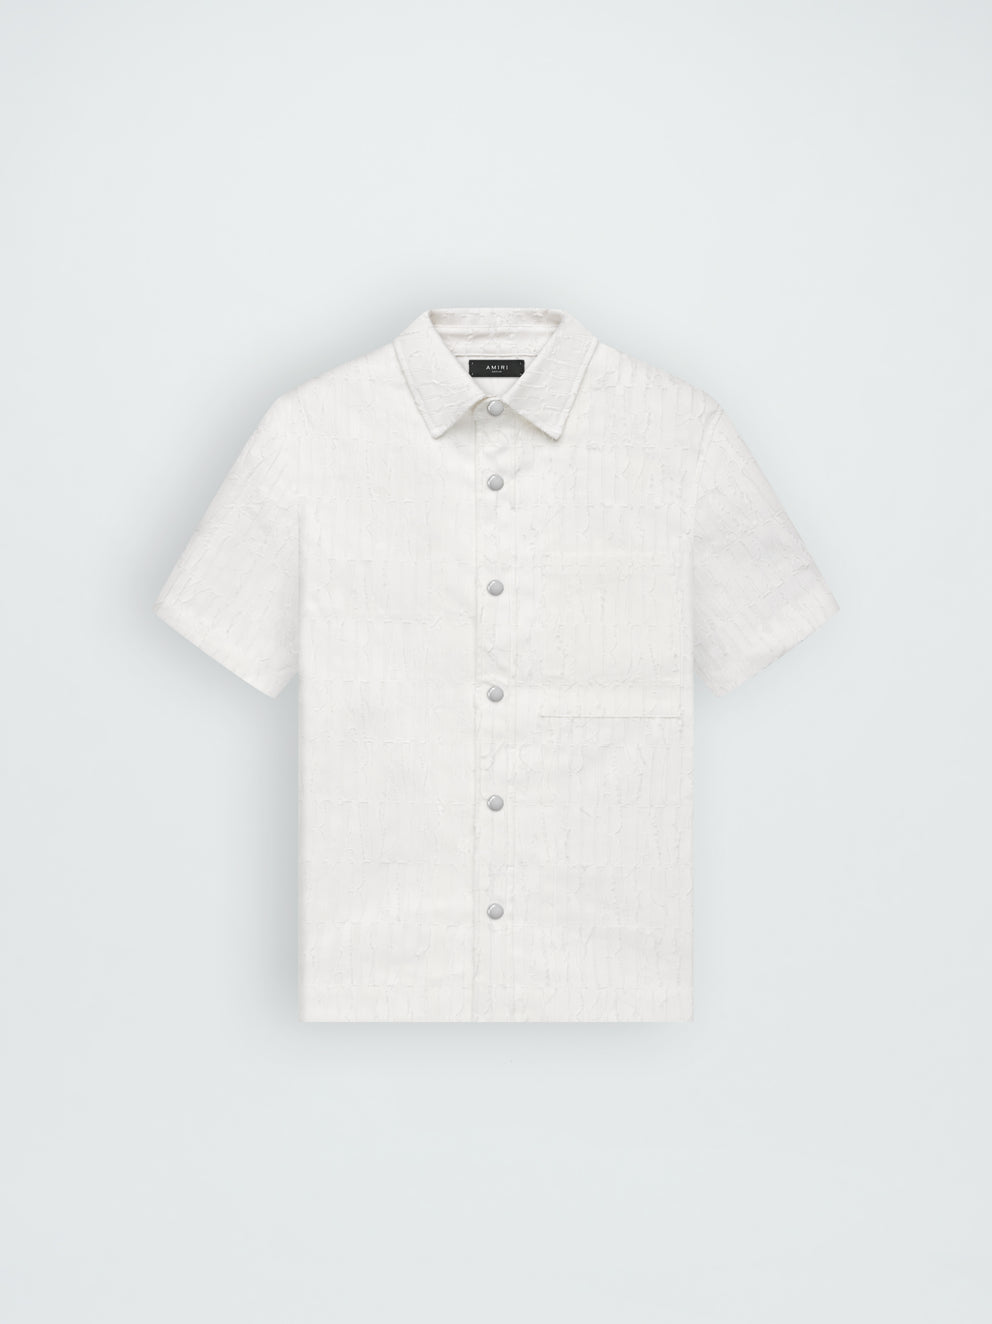 Camisas Amiri Burnout Bowling Hombre Blancas | 7395ZWMPV